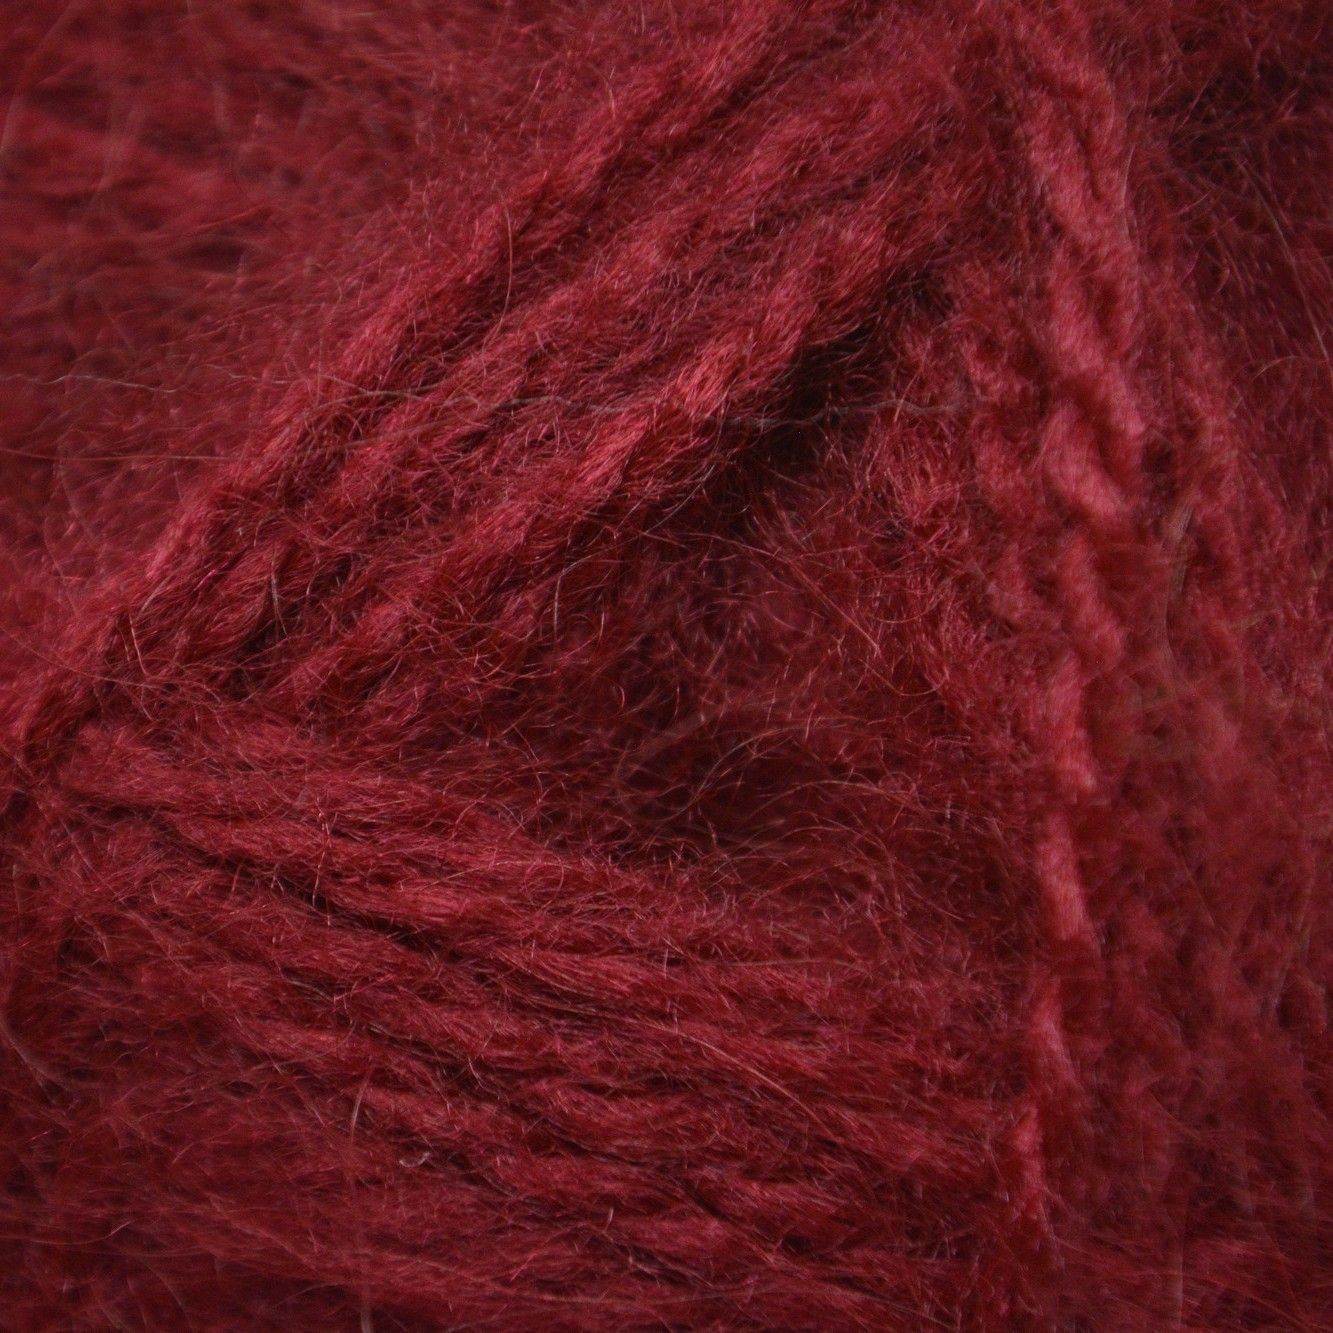 Stylecraft - Grace - Acrylic - Mohair - Wool - Aran weight yarn